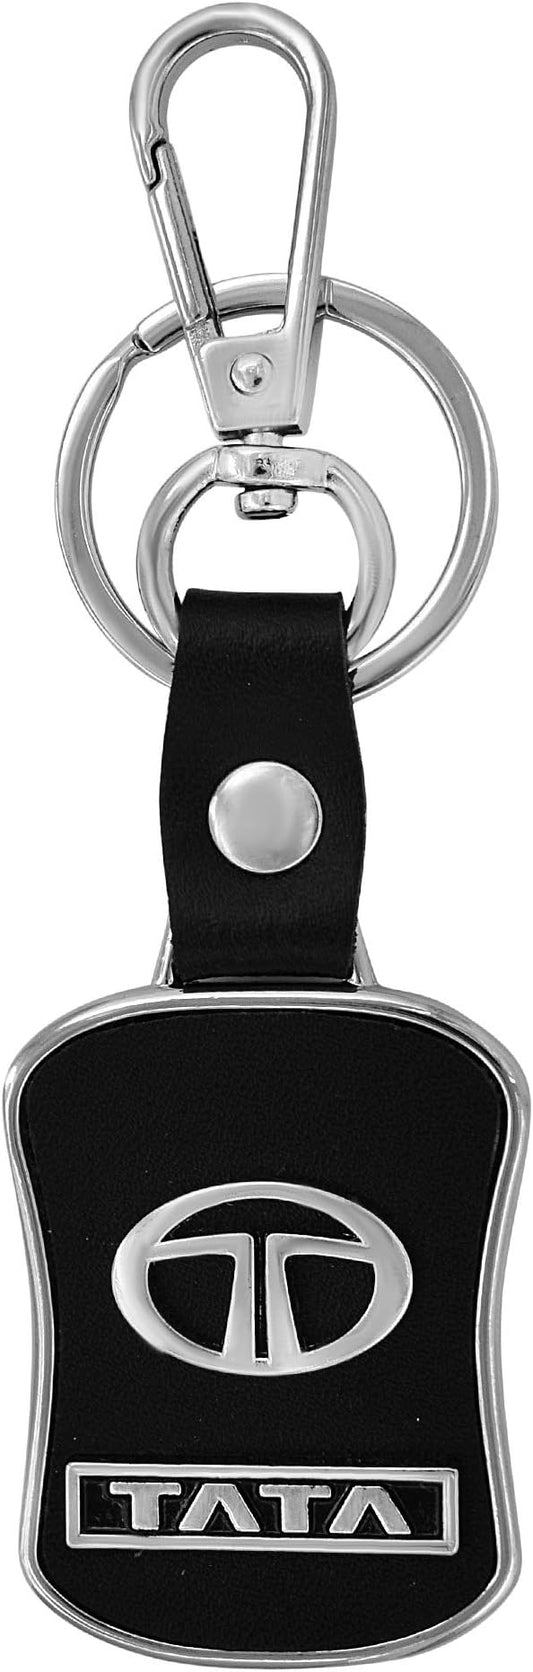 TATA Car Leather Key ChainKey Ring